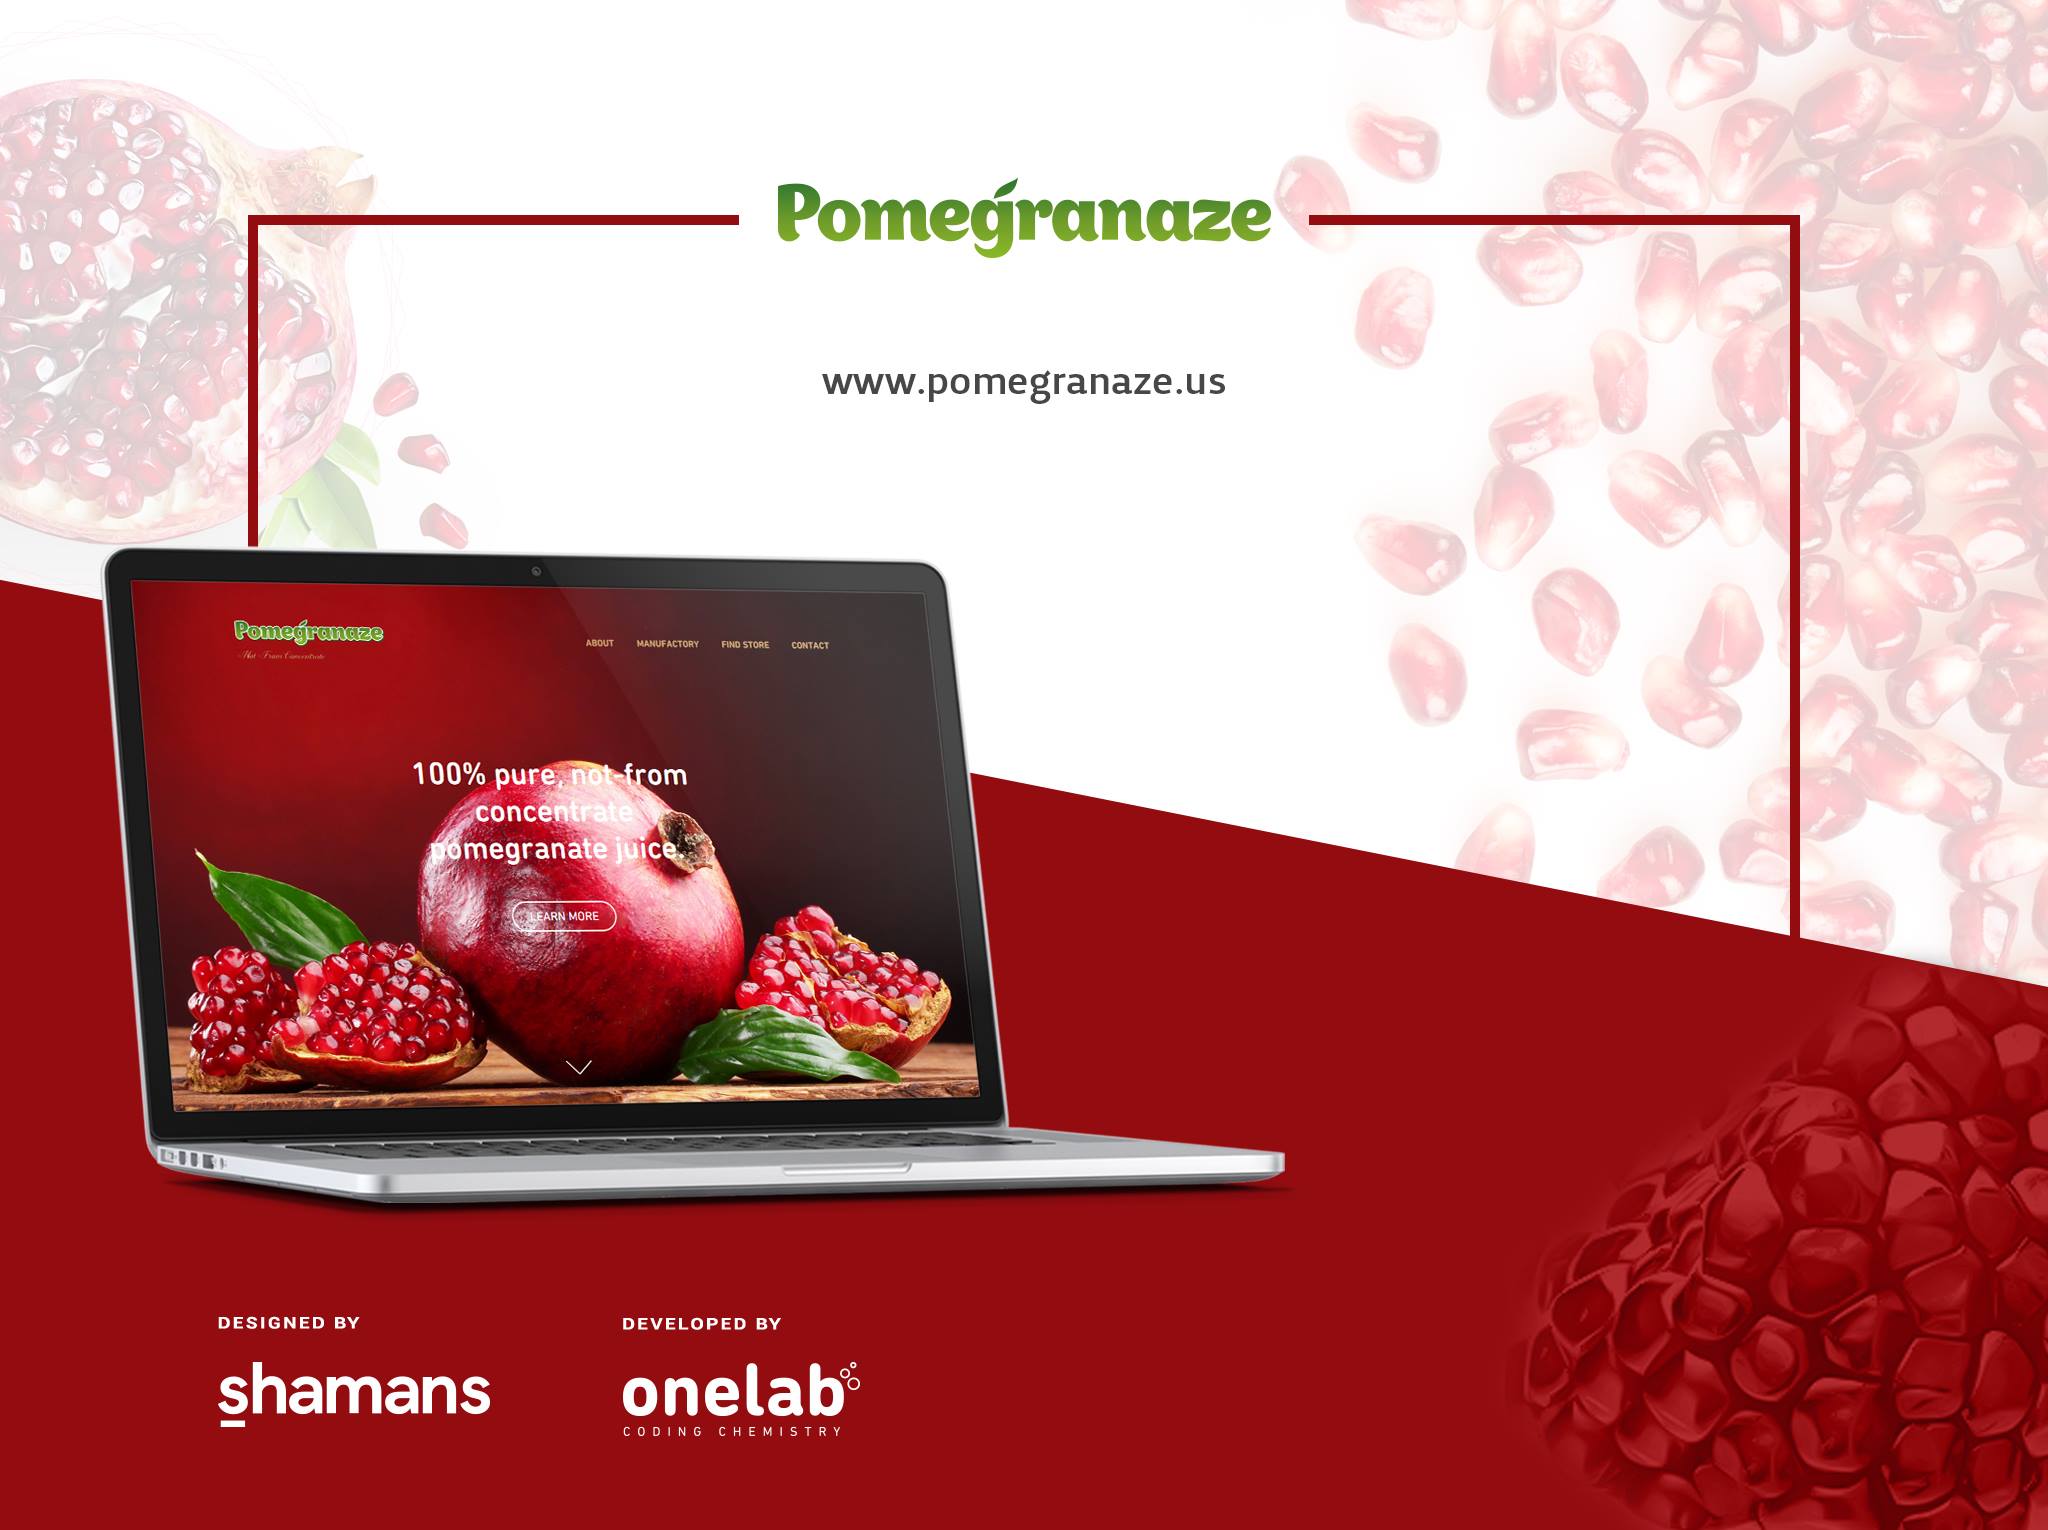 Pomegranaze website showcase